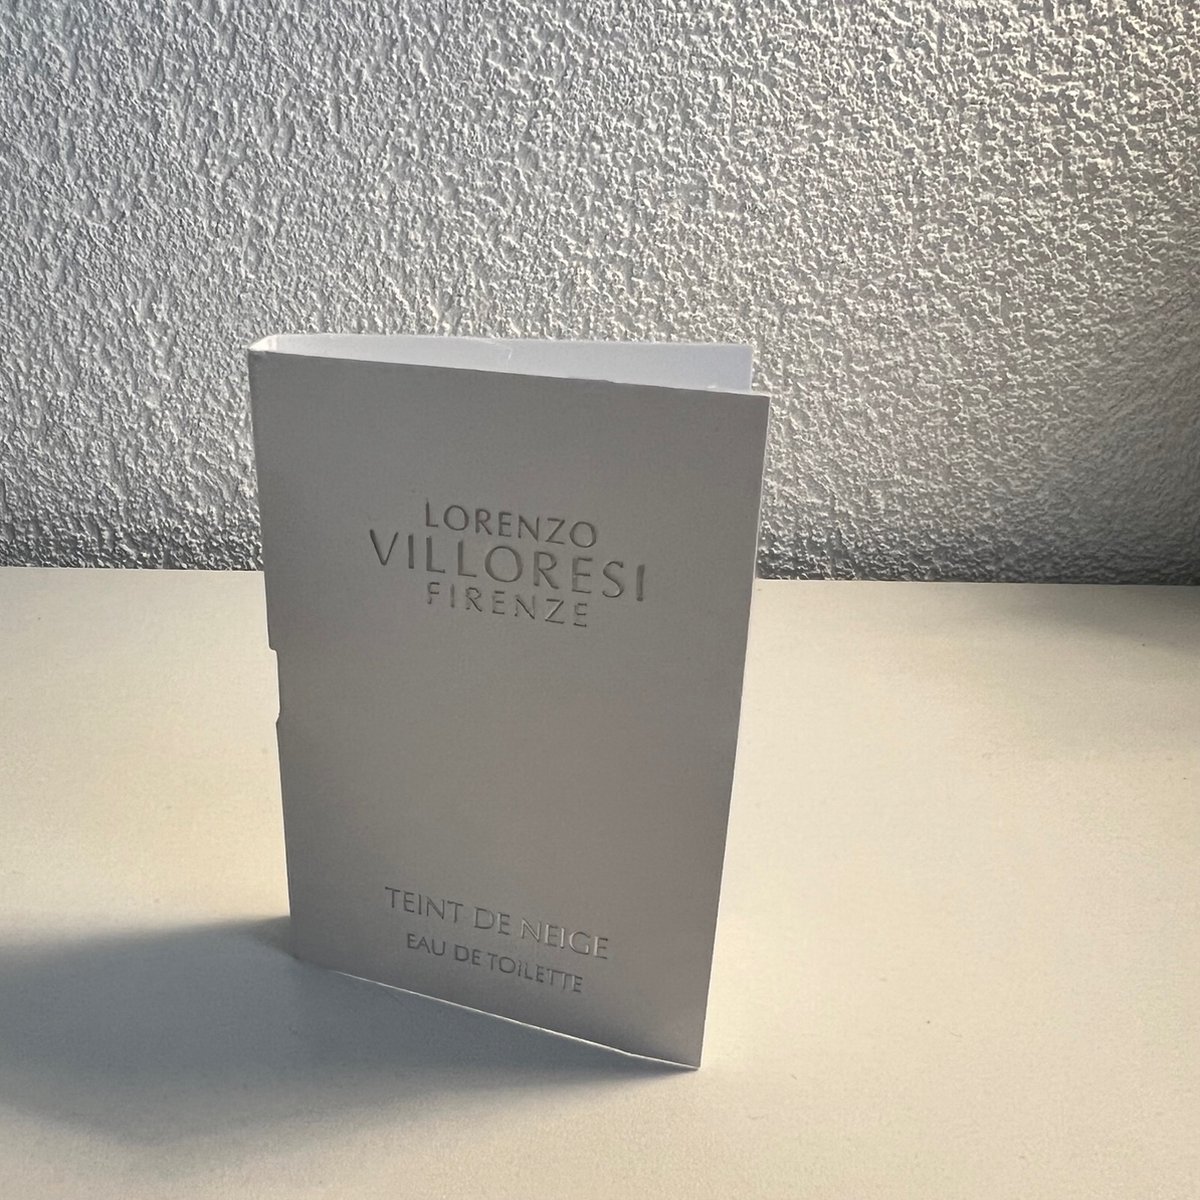 Lorenzo Villoresi Firenze - TEINT DE NEIGE - 1,5 ml EDT Original Sample